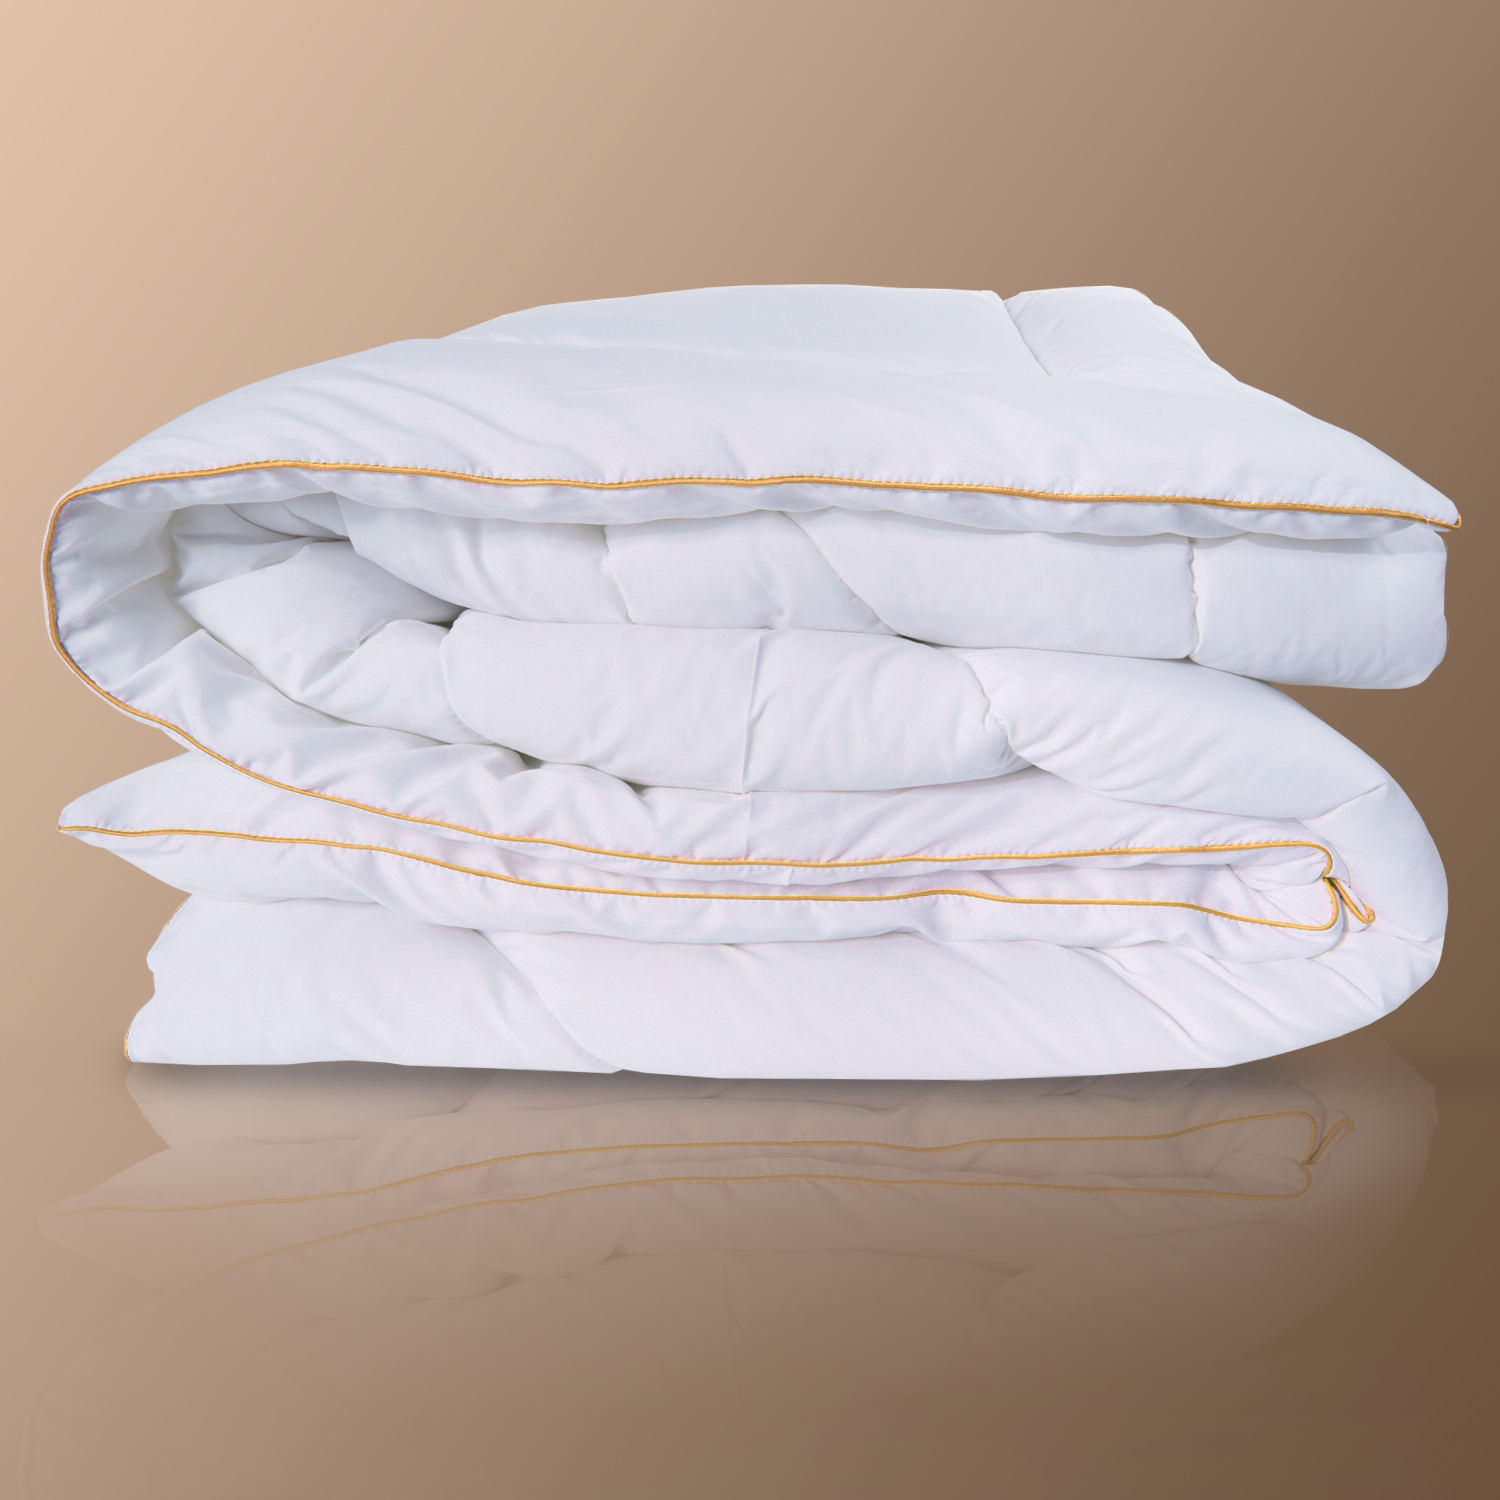 Одеяло Rodondo Лёгкое Цвет: Белый (140х205 см), размер 140х205 см dme591786 Одеяло Rodondo Лёгкое Цвет: Белый (140х205 см) - фото 1